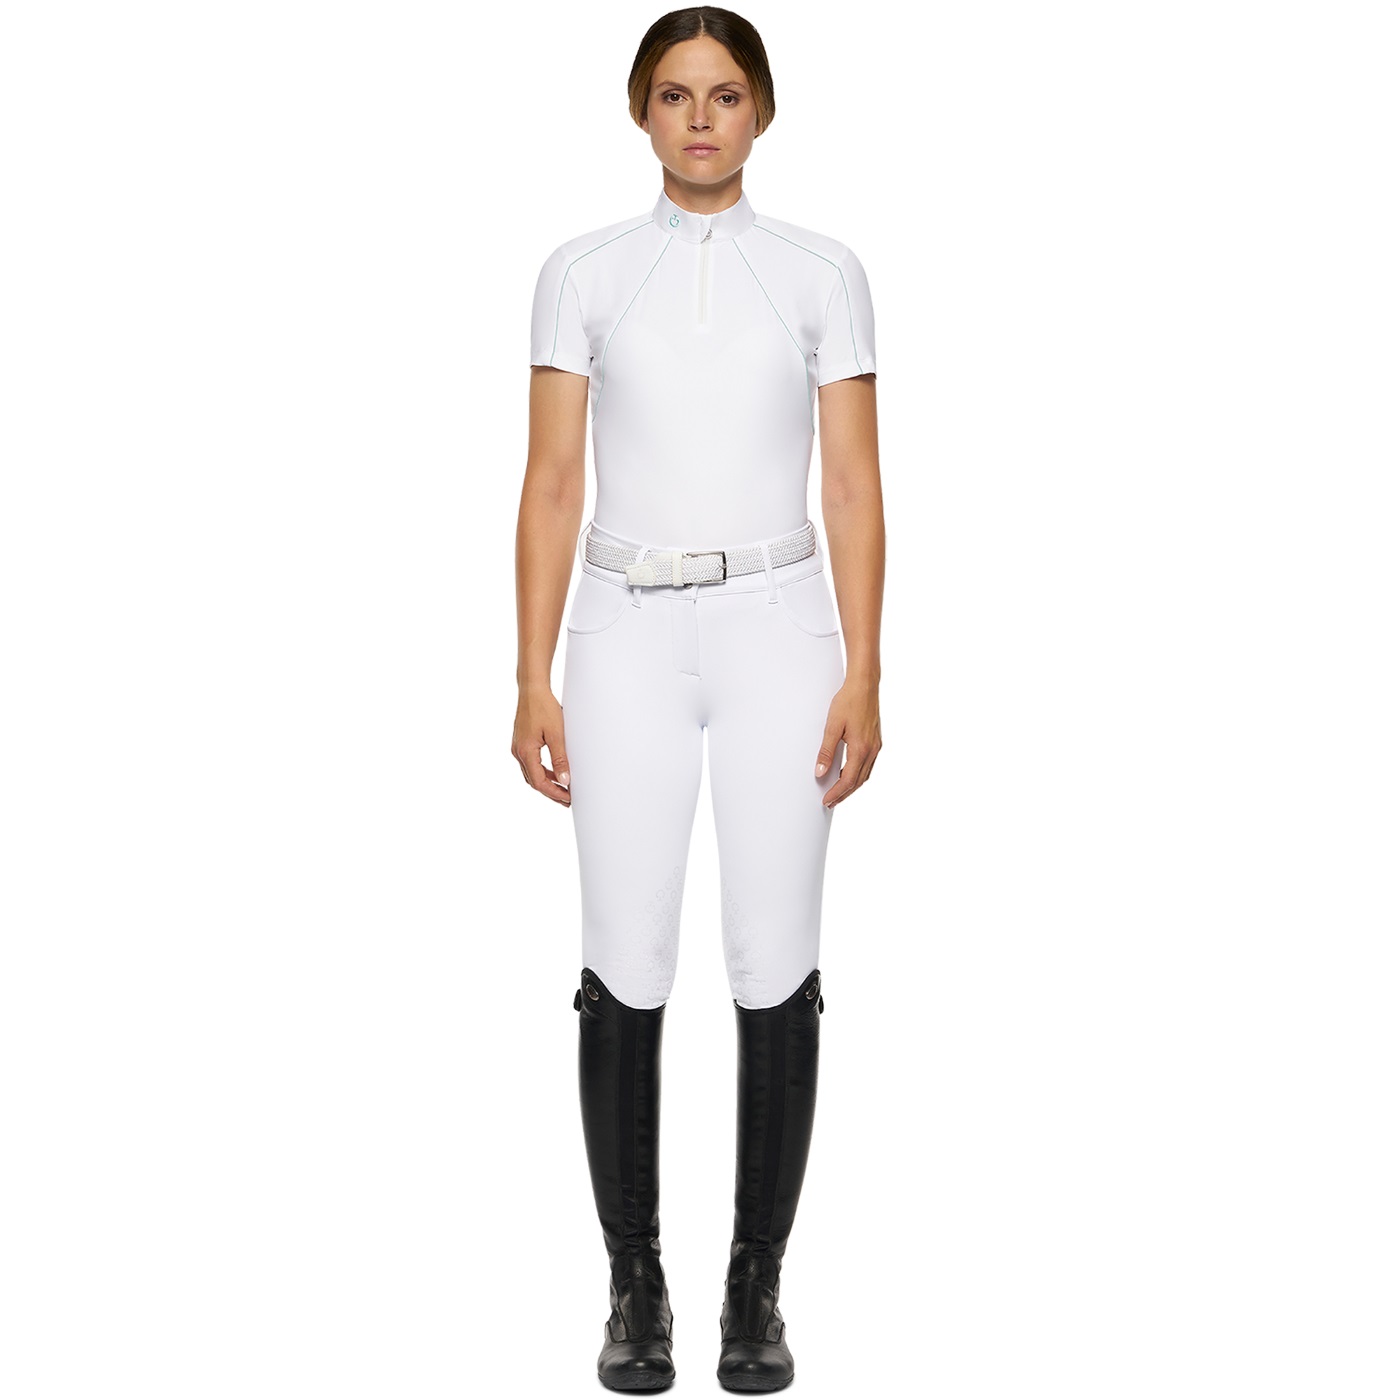 CAVALLERIA TOSCANA elegantes Kurzarm Damen Turniershirt Zip Jersey  - white - S - 1